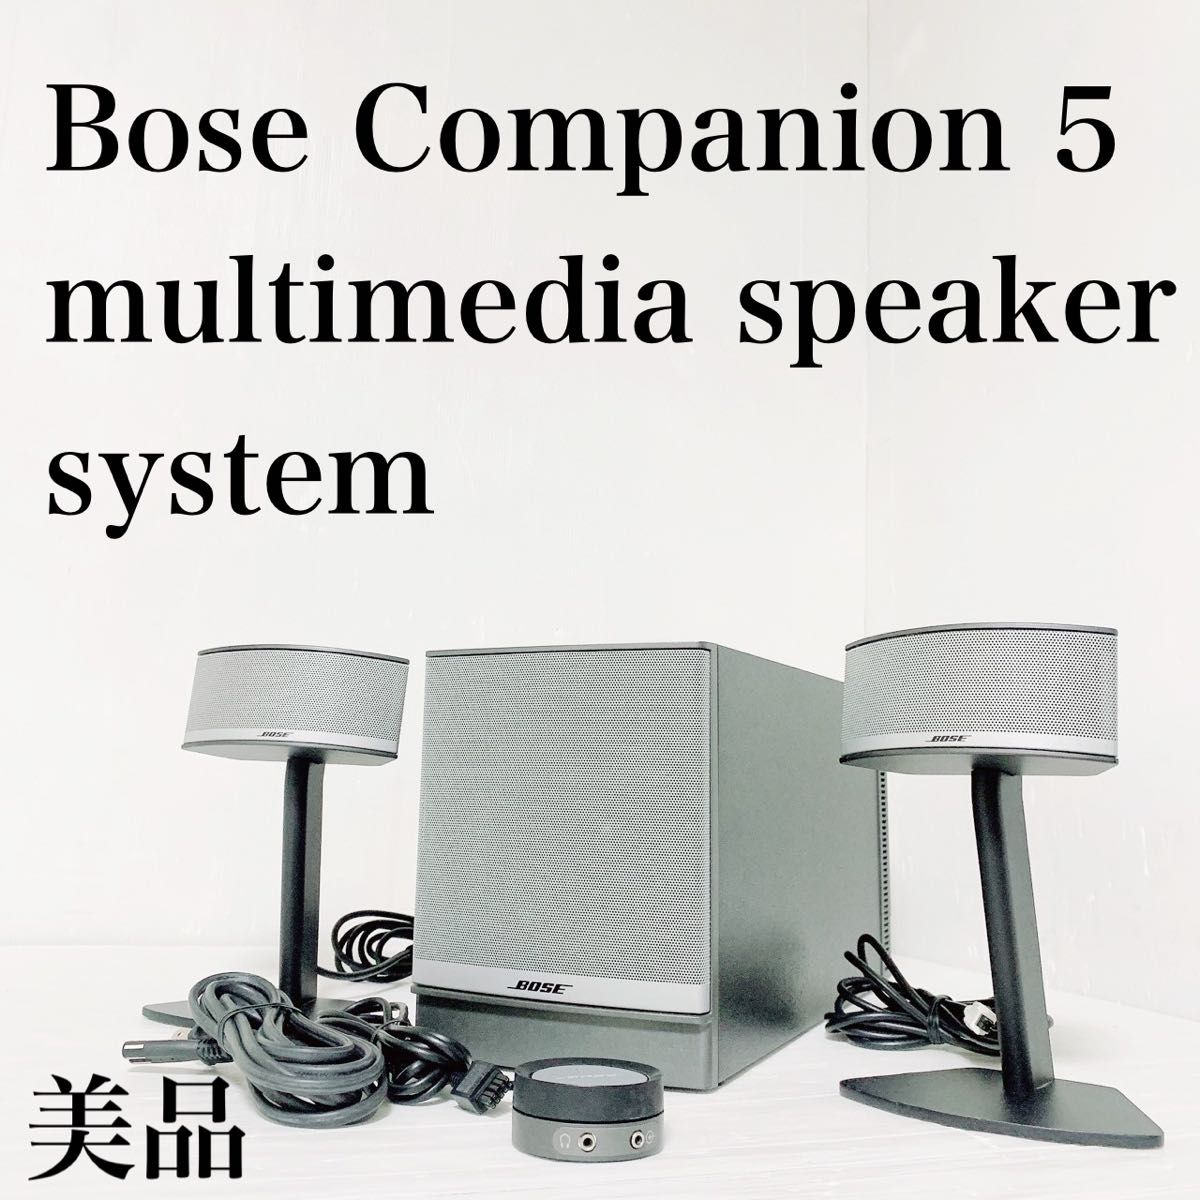 BOSE Companion® 5 multimedia speaker | www.myglobaltax.com